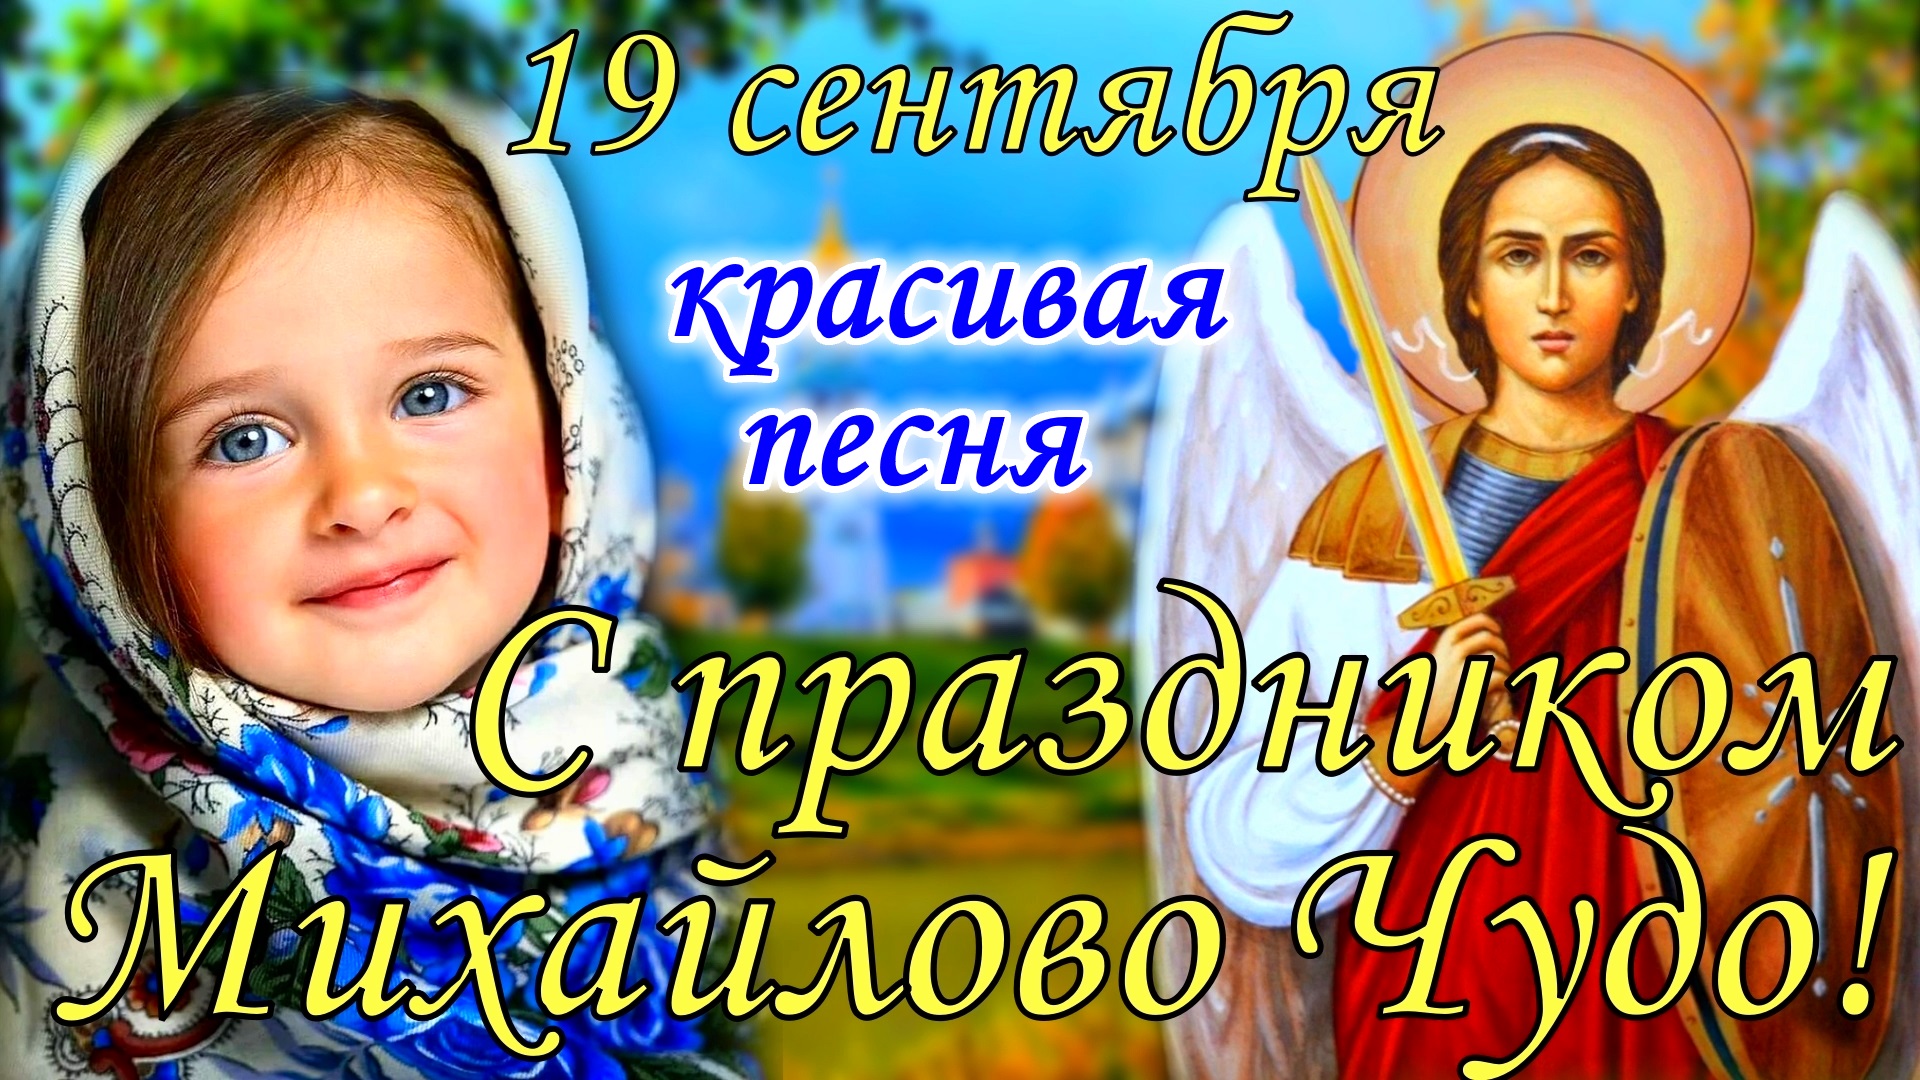 Открытки Михайлово чудо 19 сентября